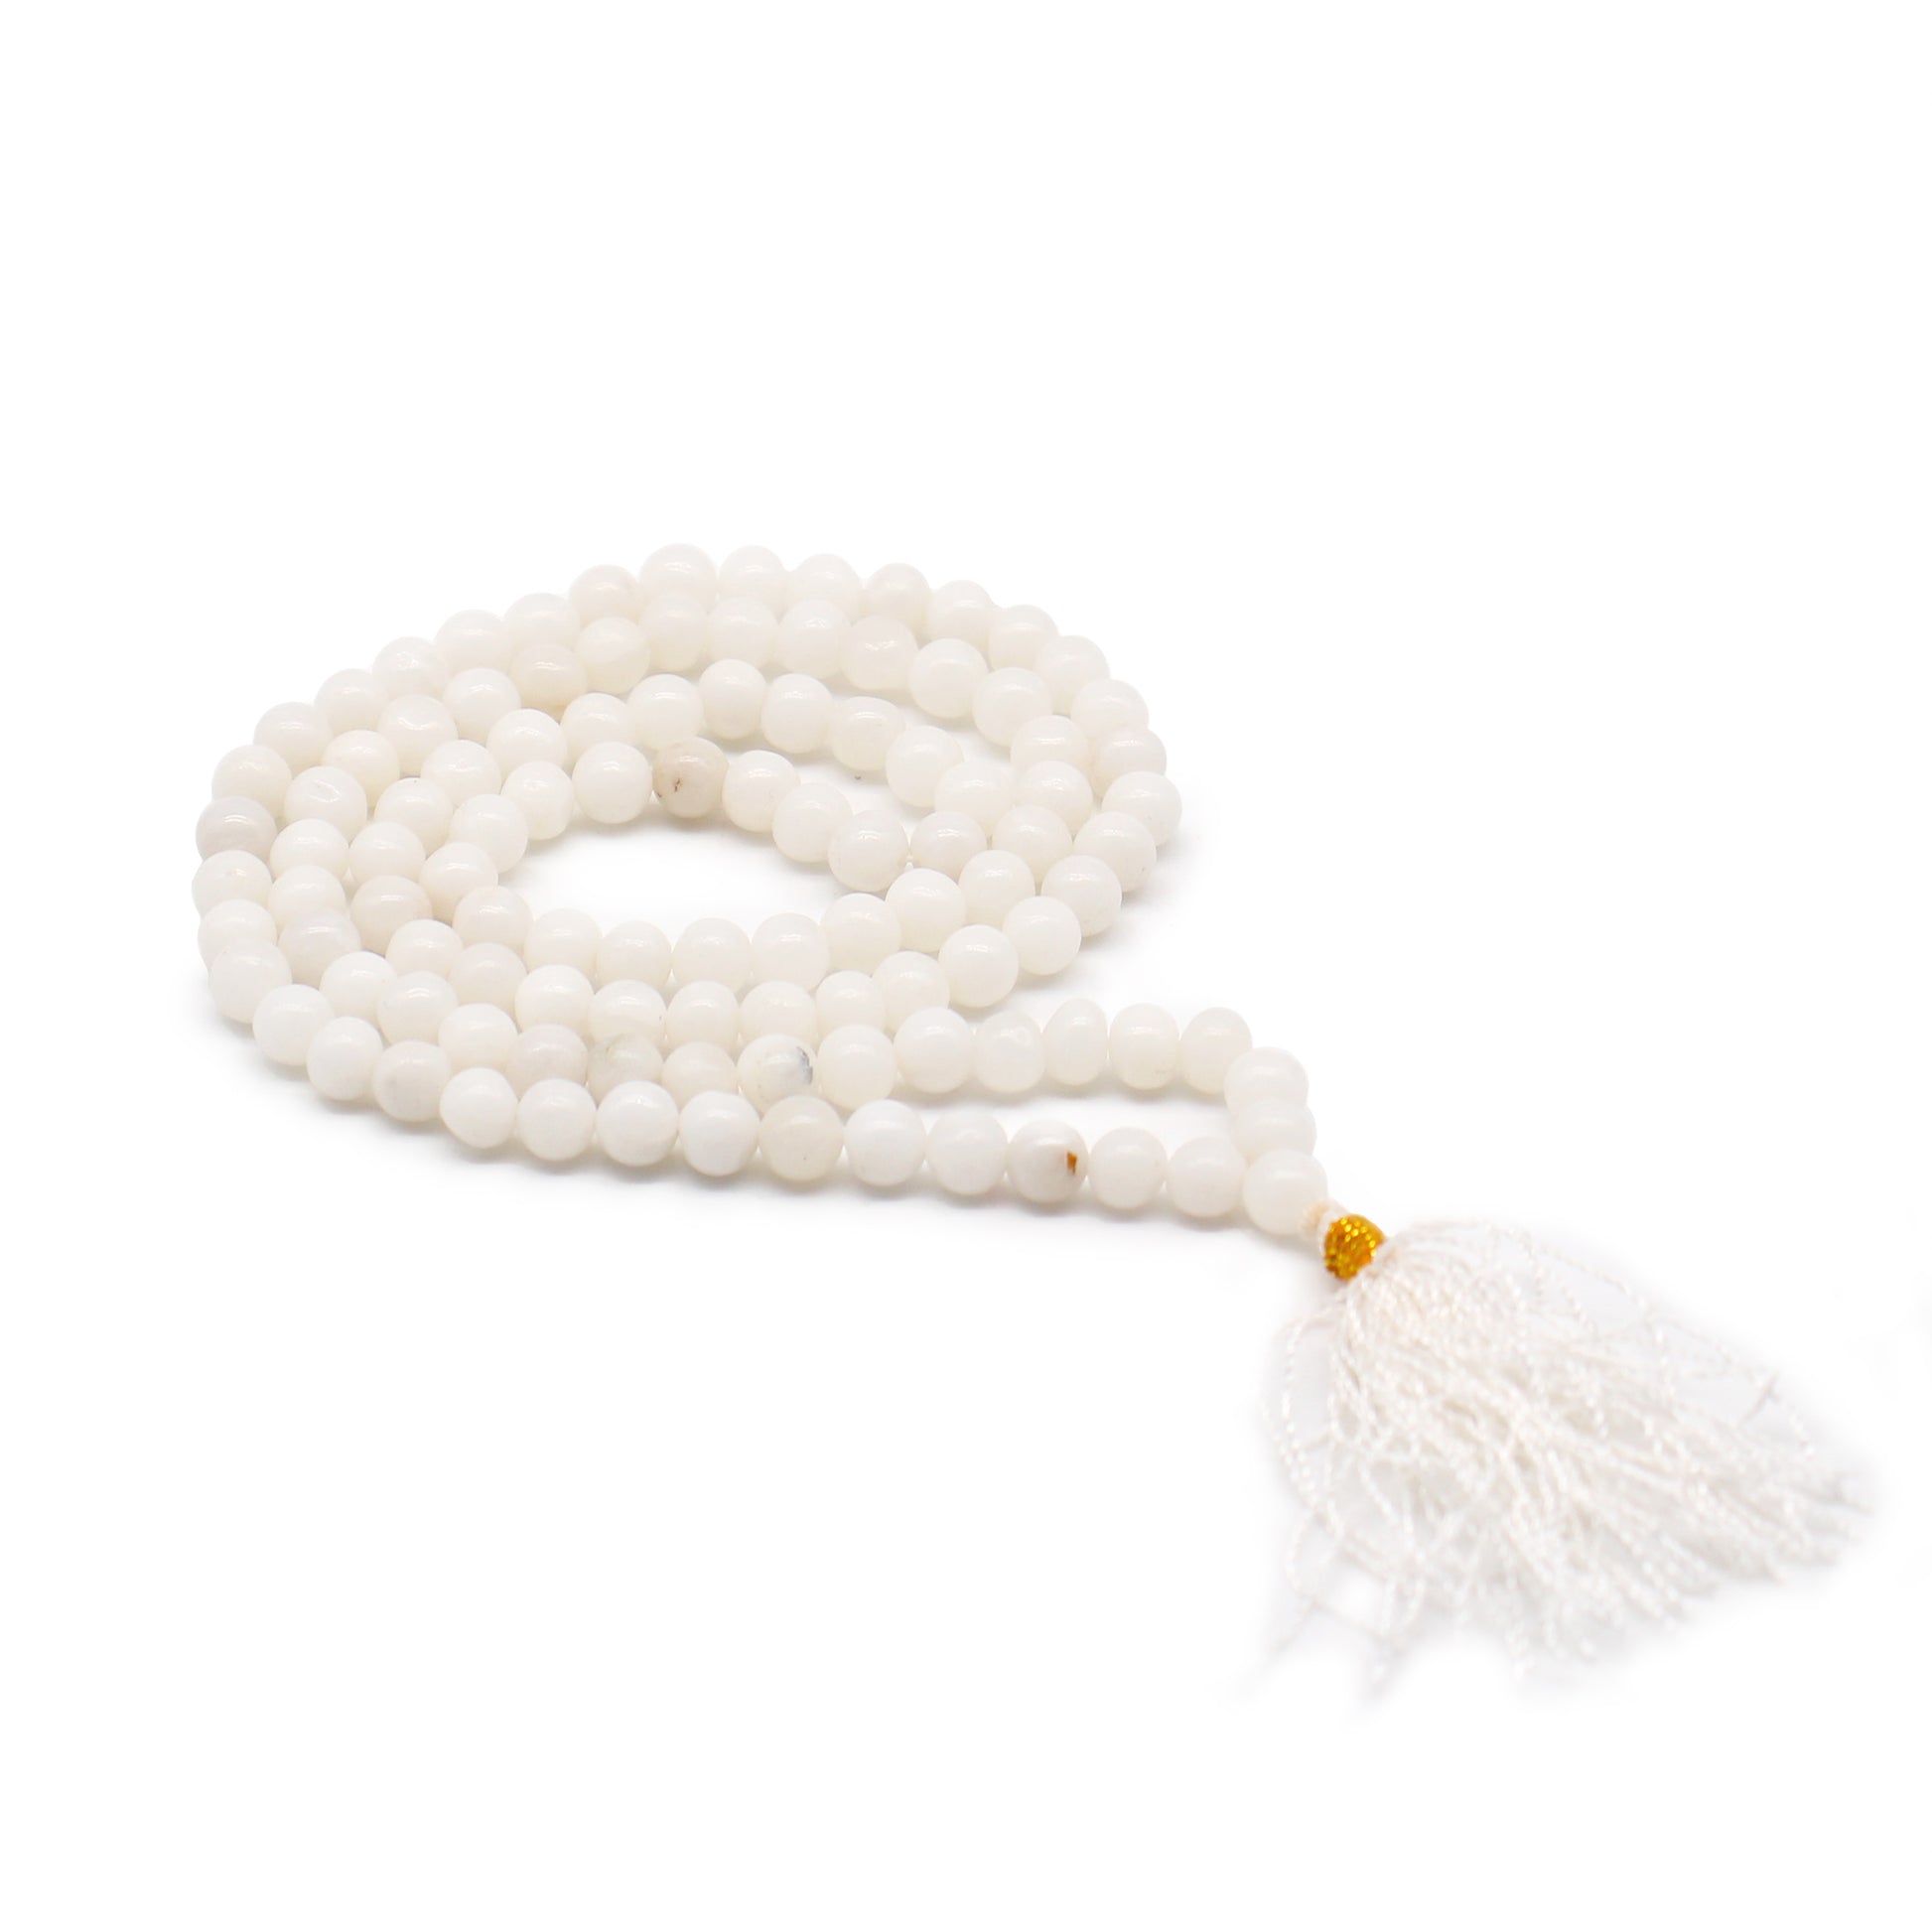 108 Bead Gemstone Mala Beads - White Quartz - Cosmic Serenity Shop